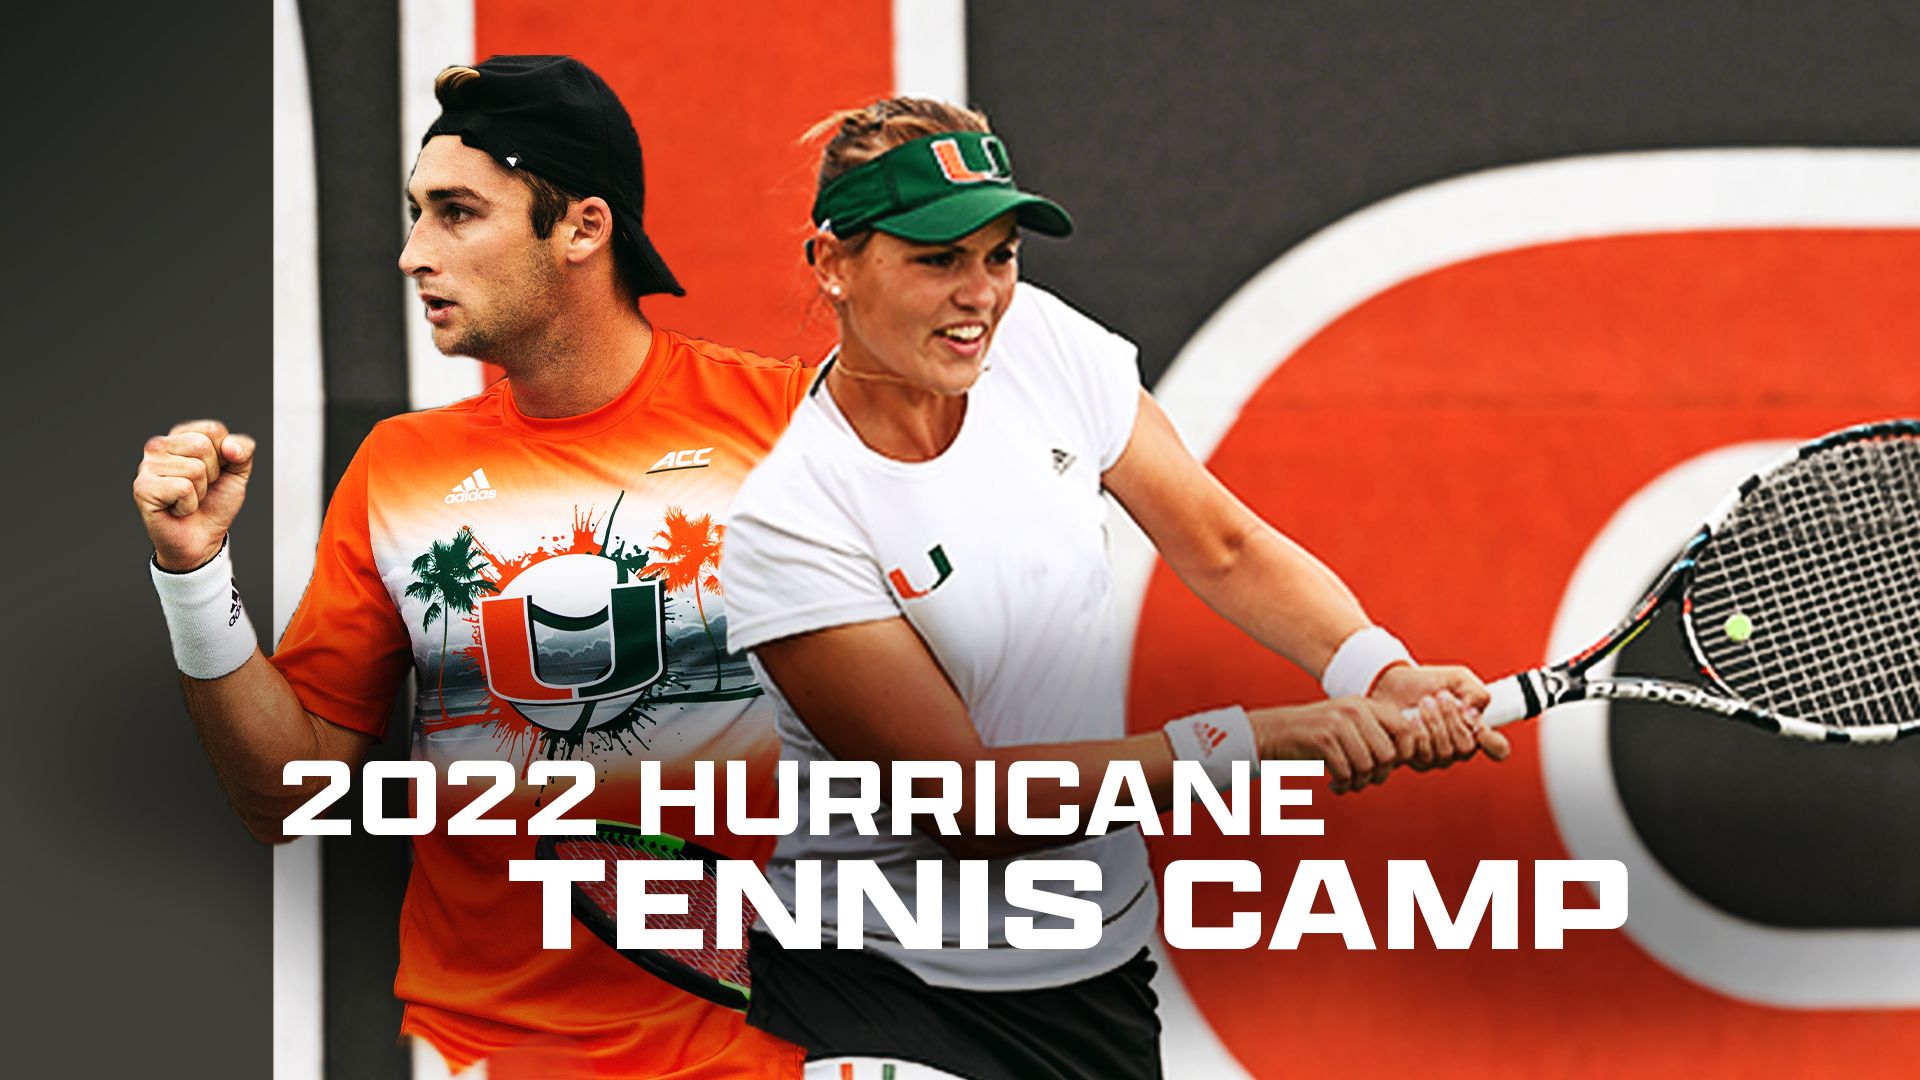 Hurricane Tennis Camp Registration Now Open